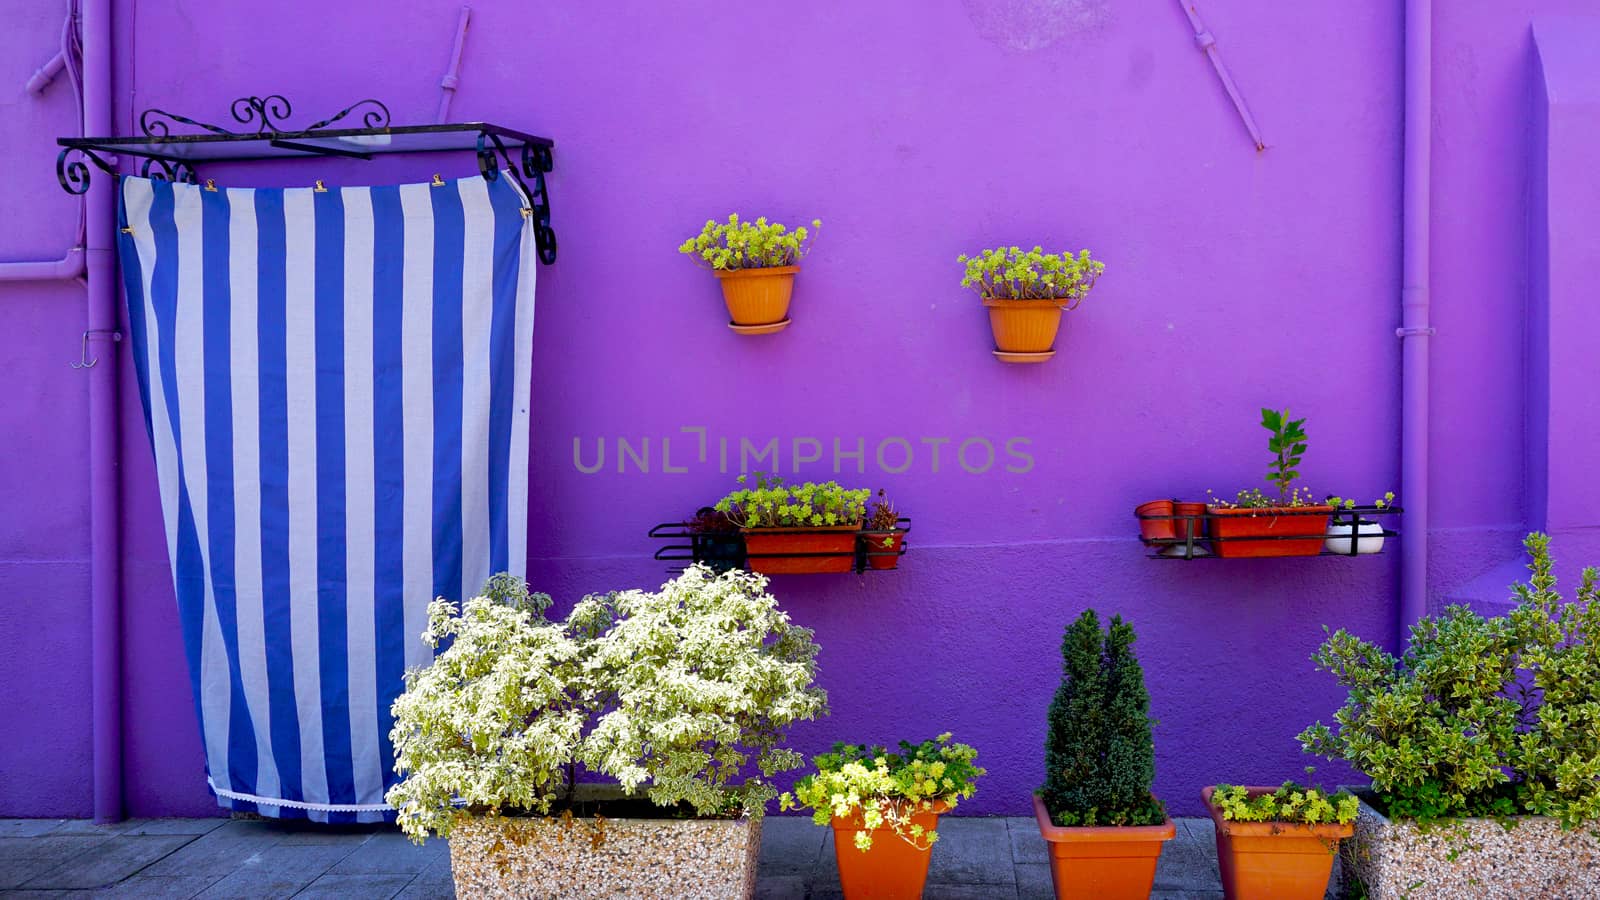 Burano purple wall color house  by polarbearstudio